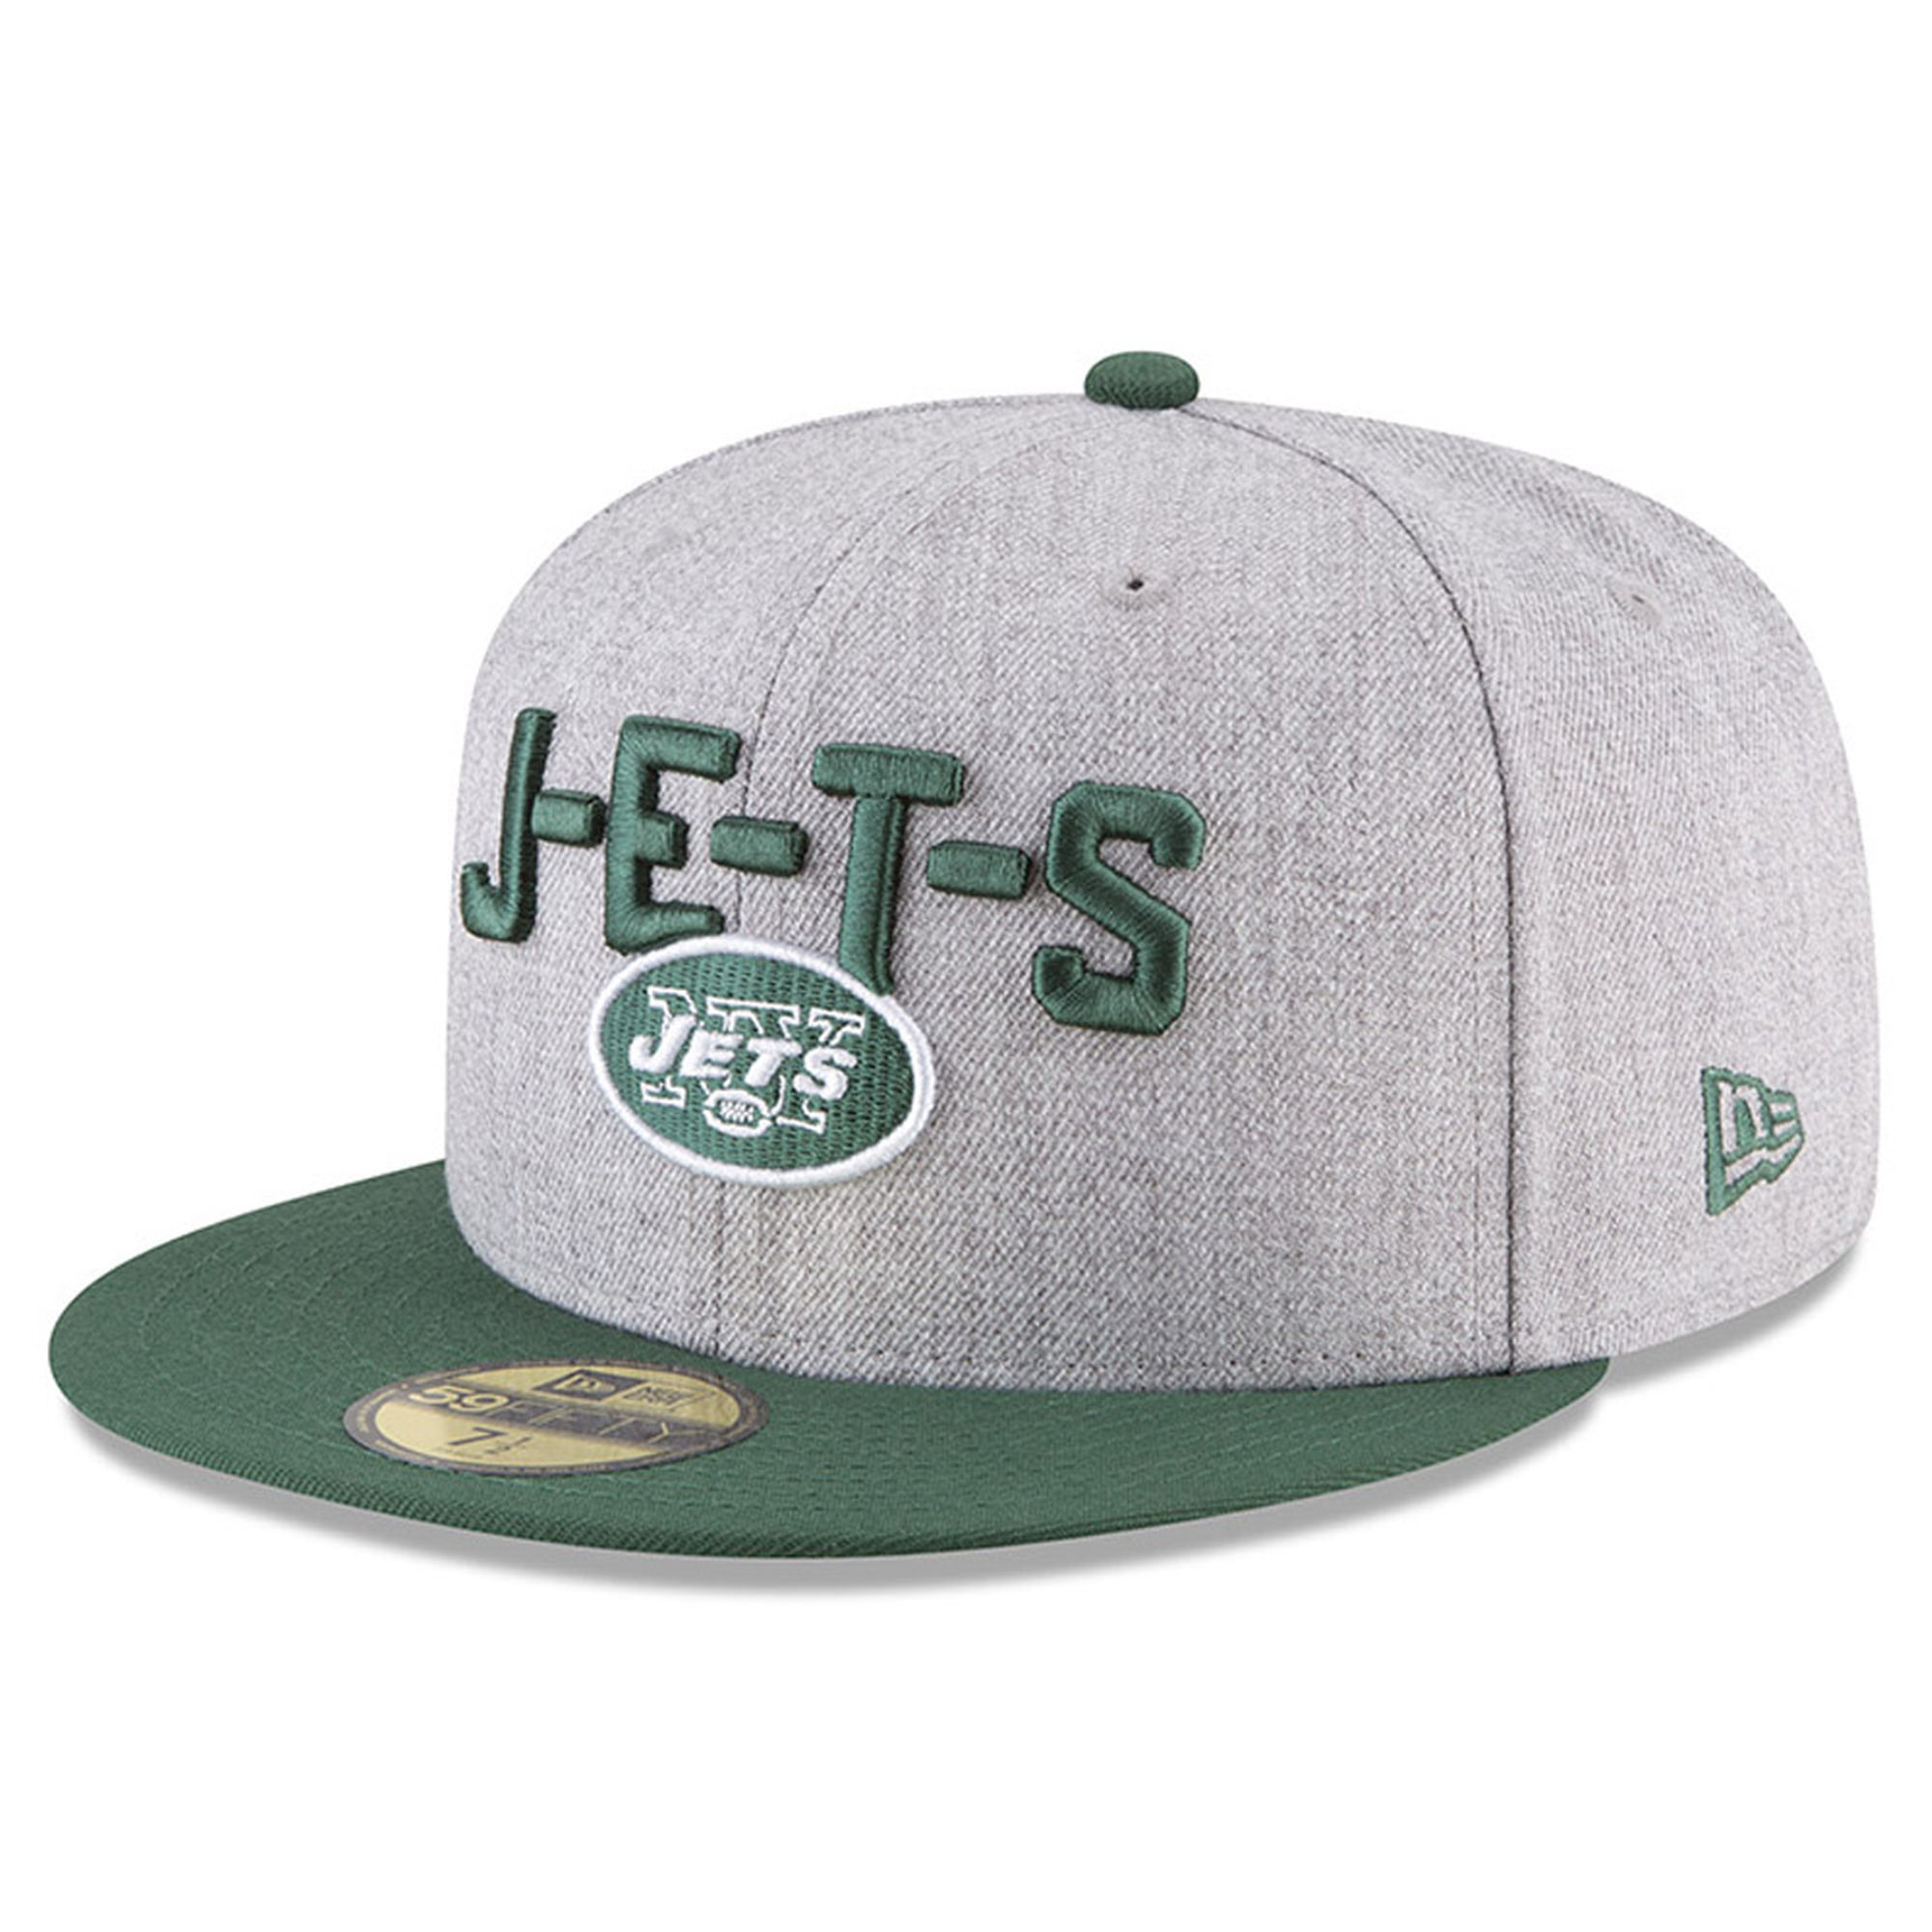 Sam Darnold Jets Jersey, NFL Draft Hats & Team Gear 2018